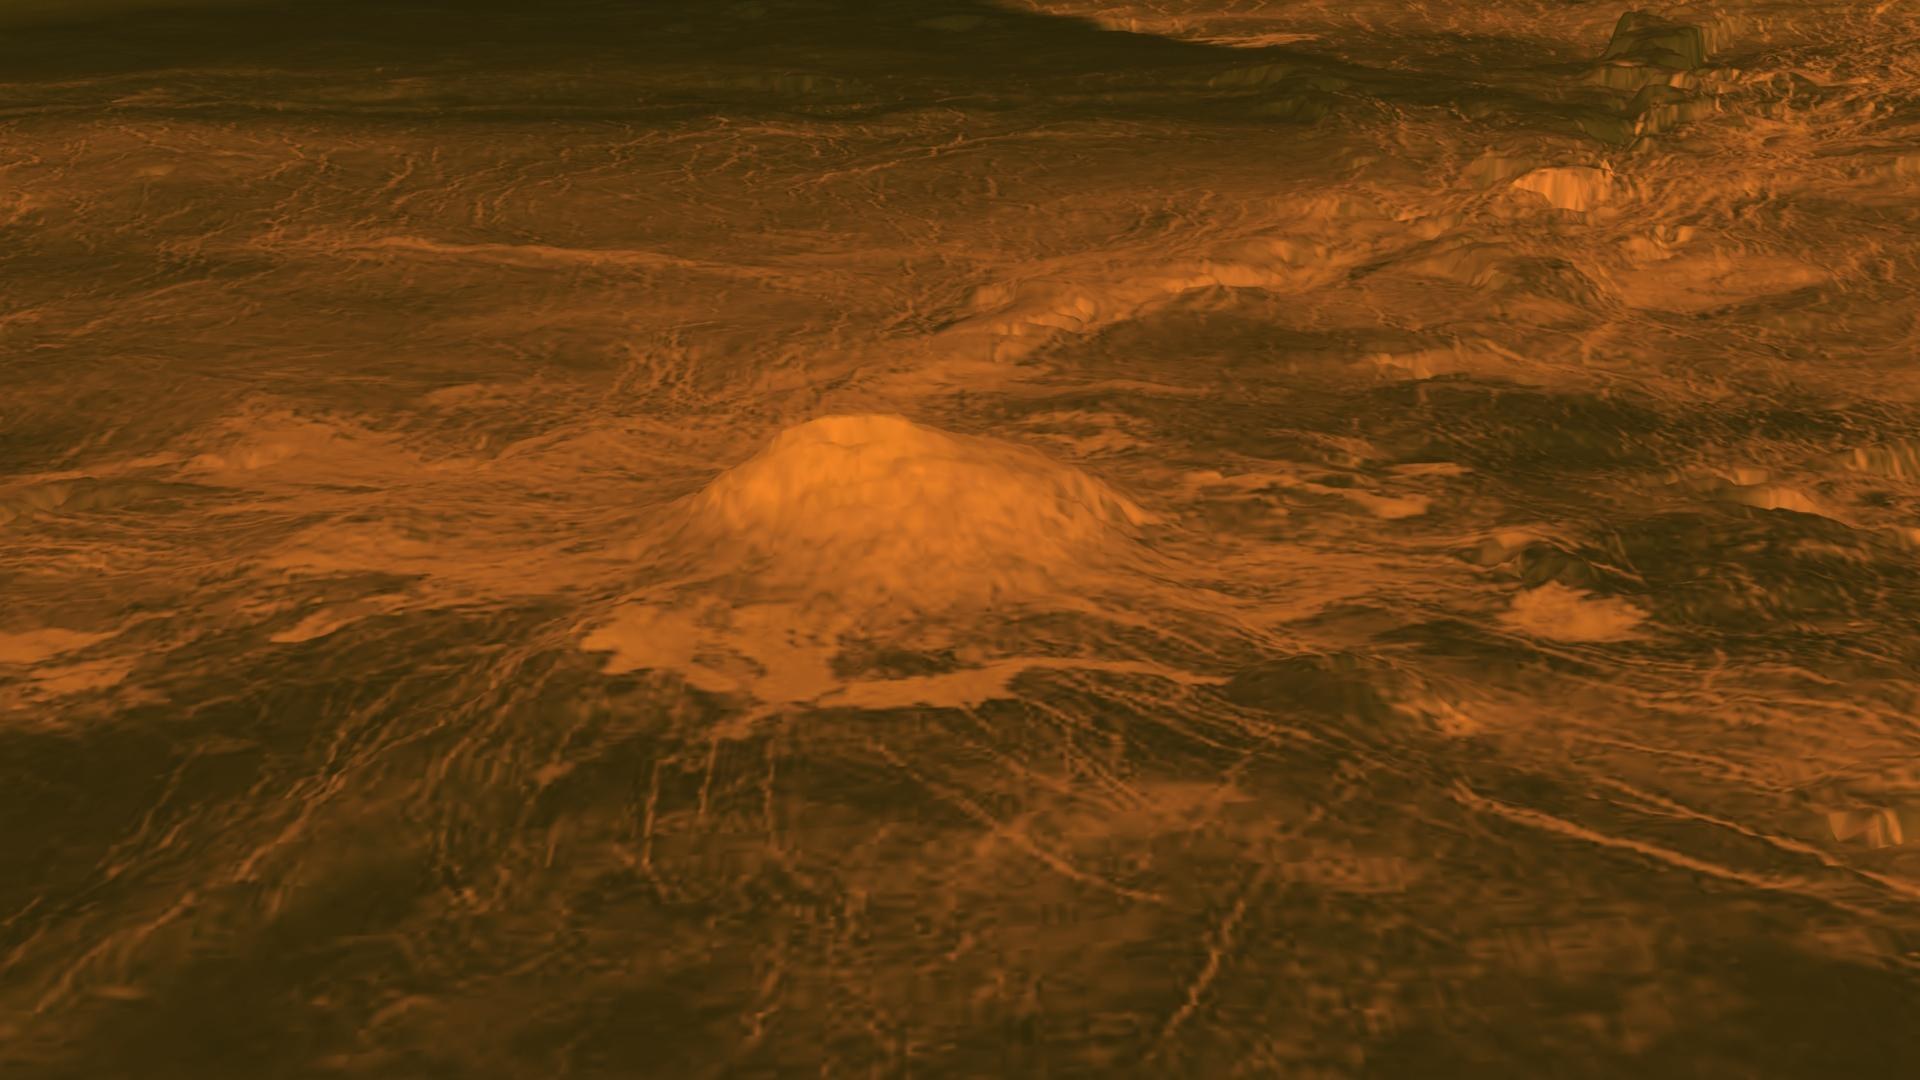 Elevation model of Idunn Mons